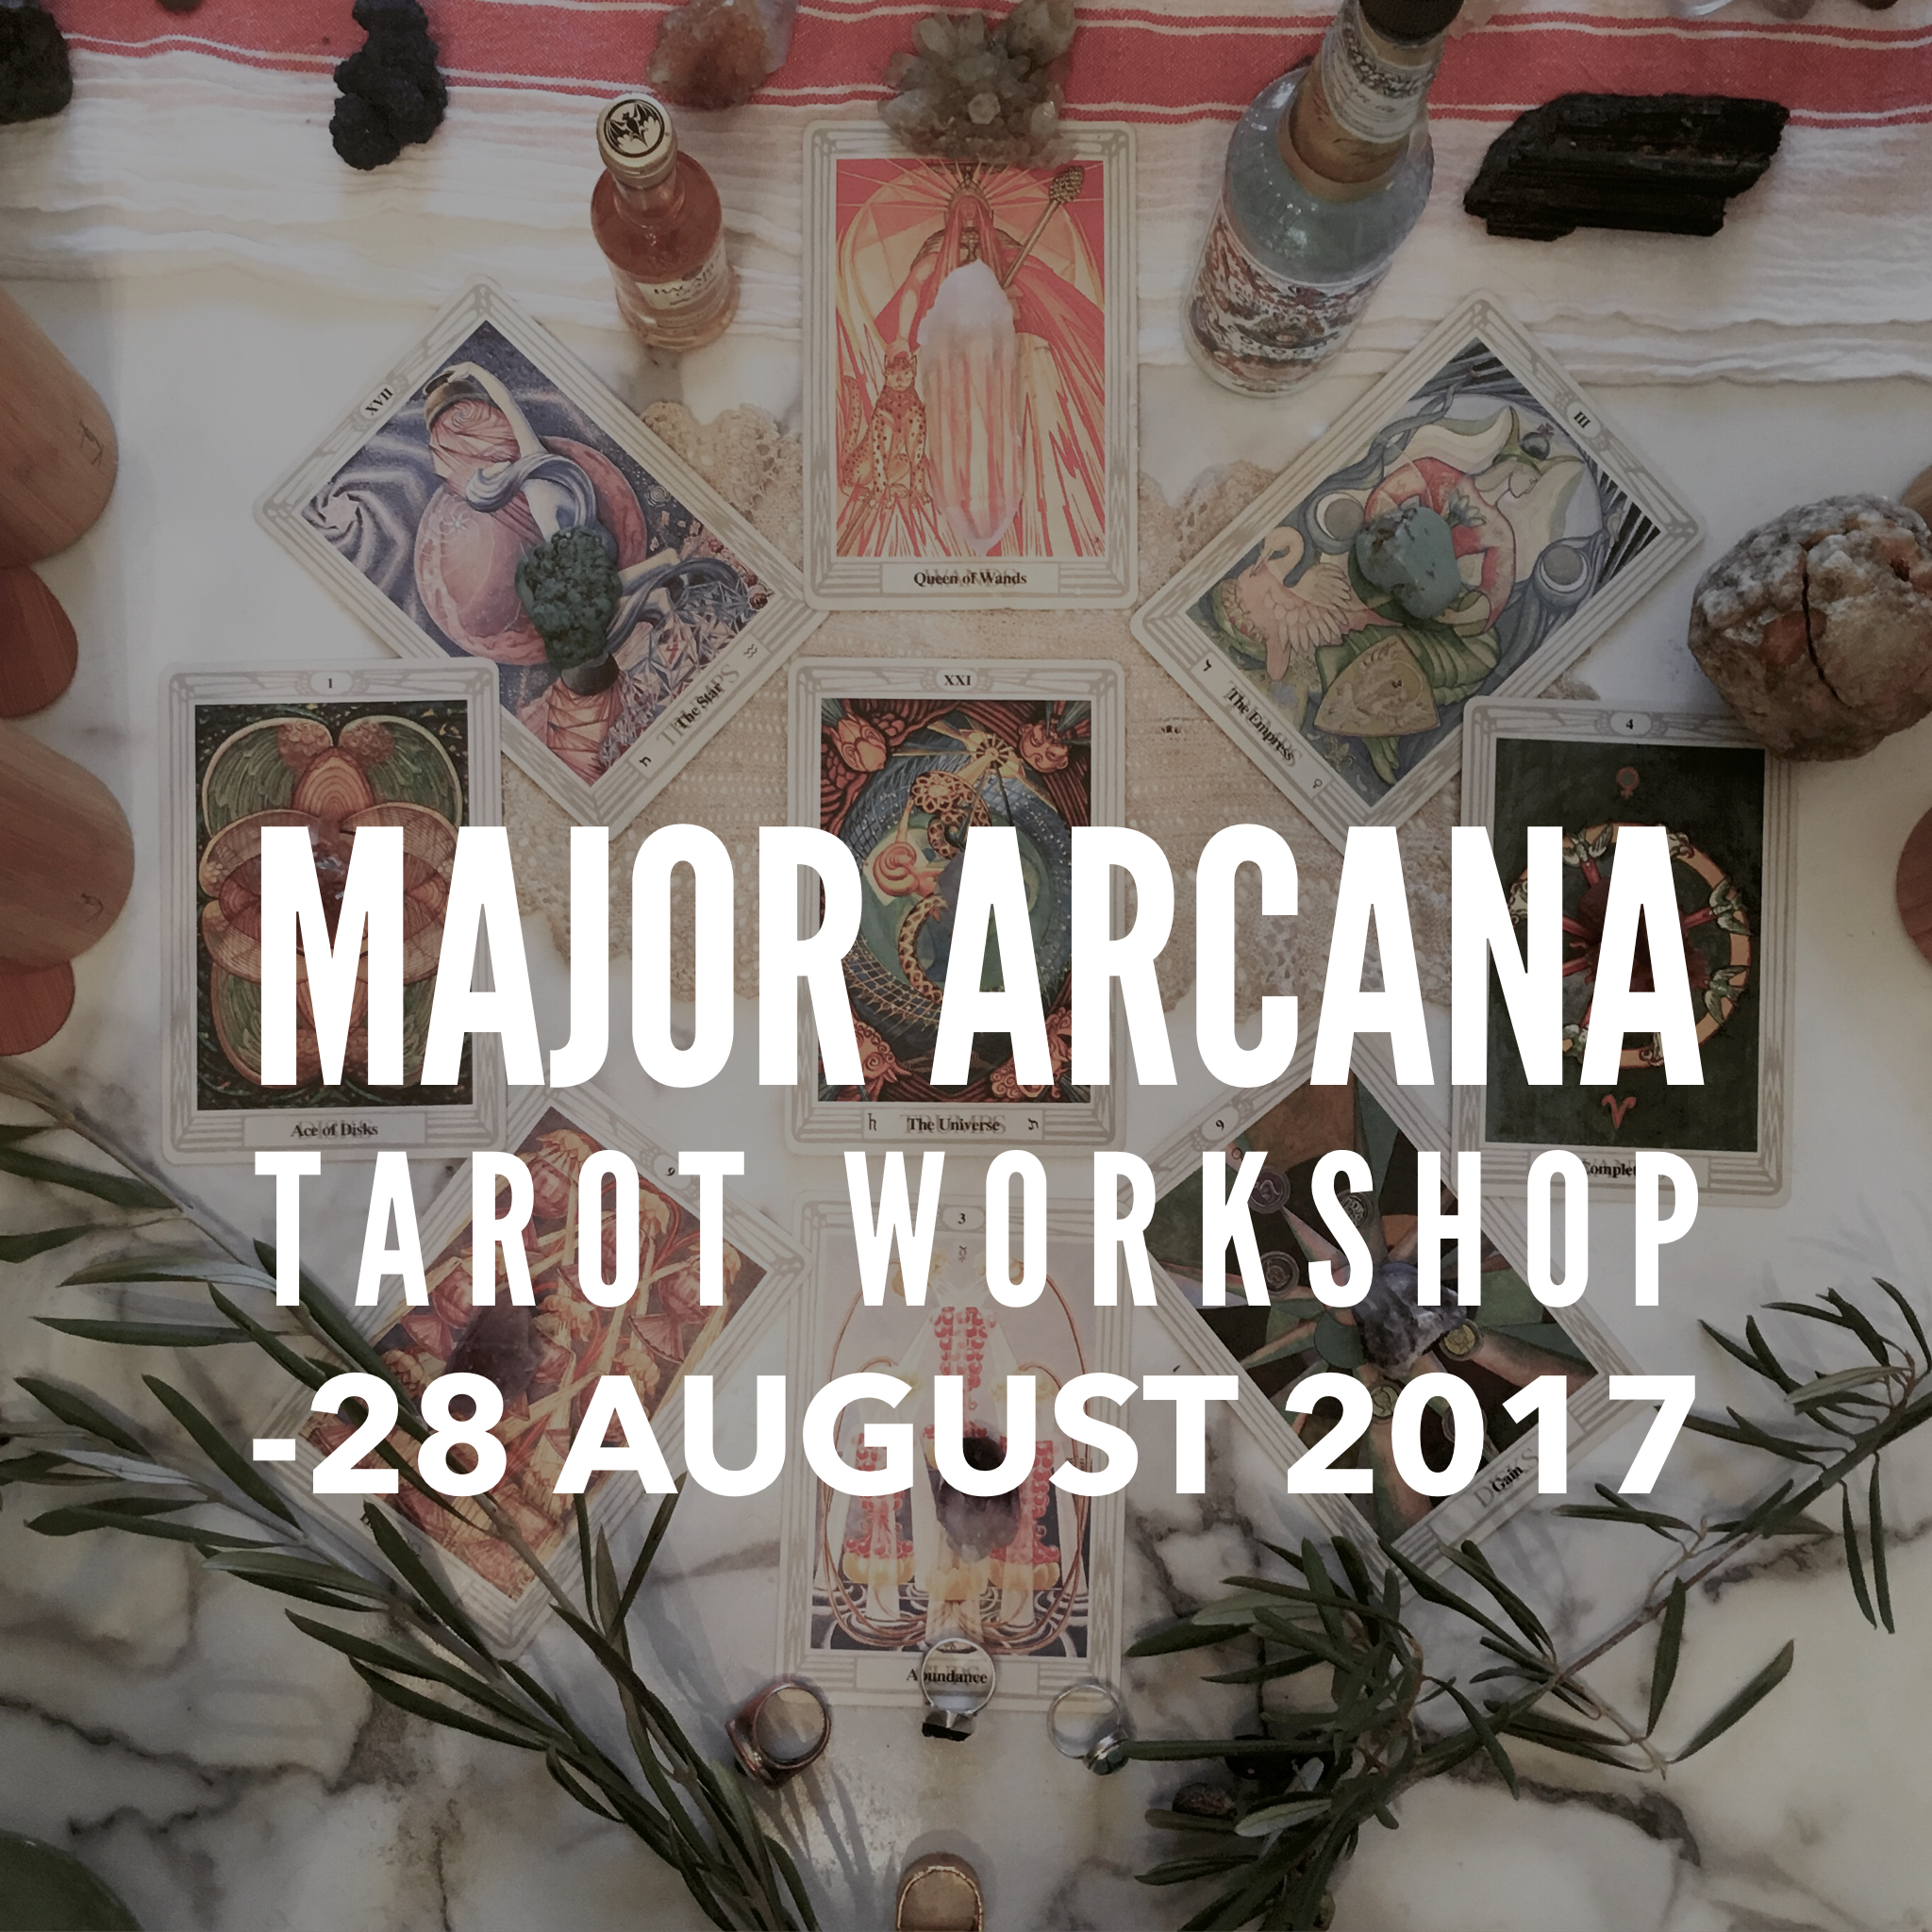 Major Arcana Tarot Workshop flier